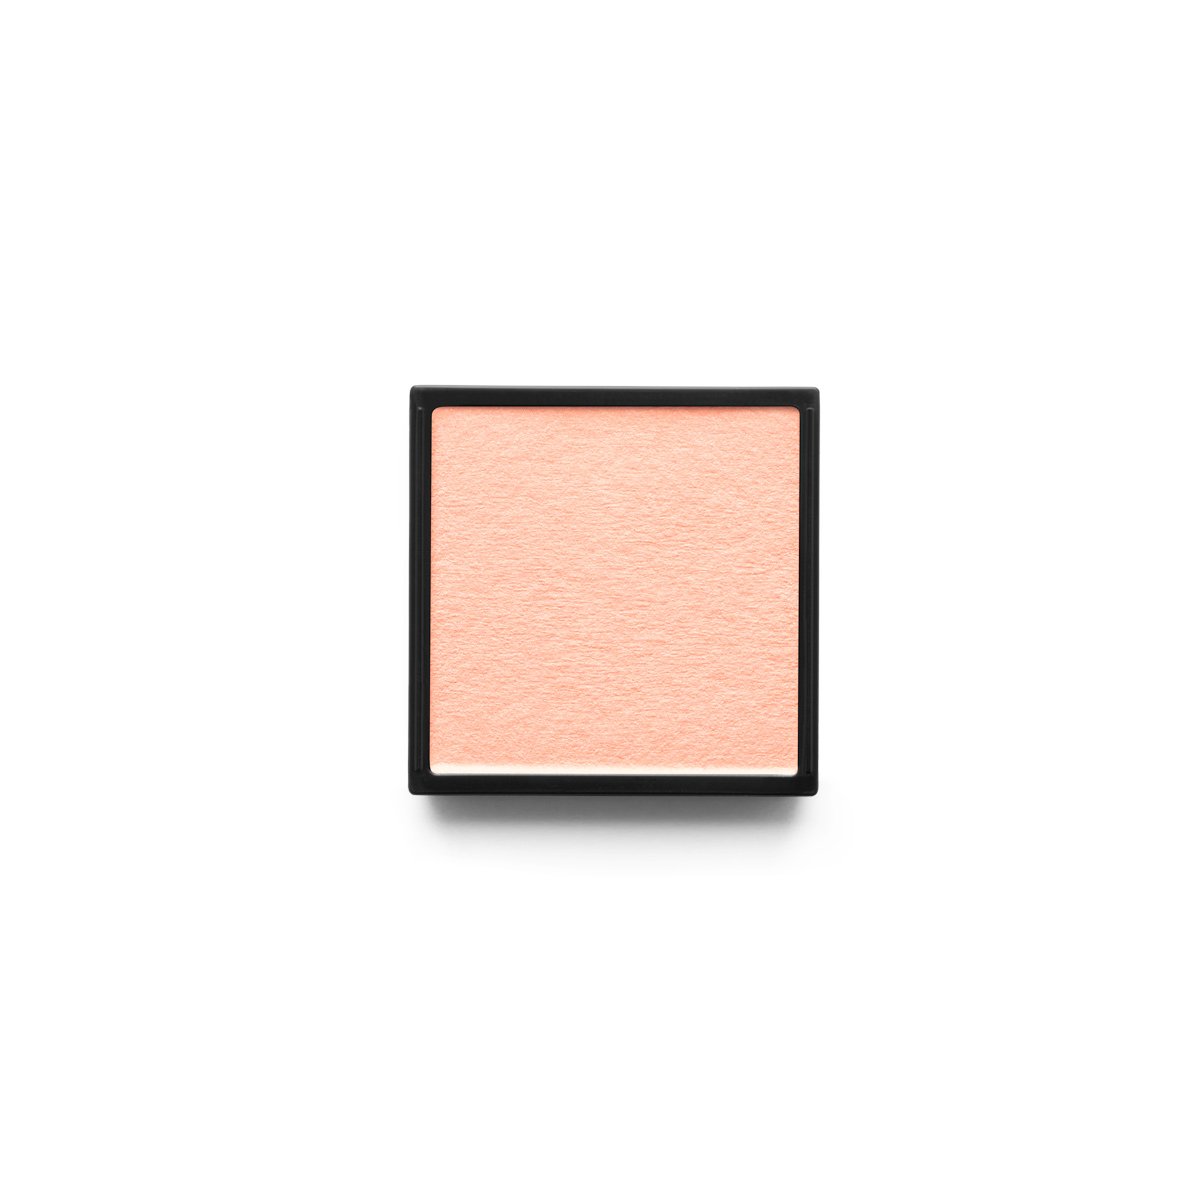 POUDRE - MATTE SOFT PEACH - matte finish eyeshadow in soft peach shade 